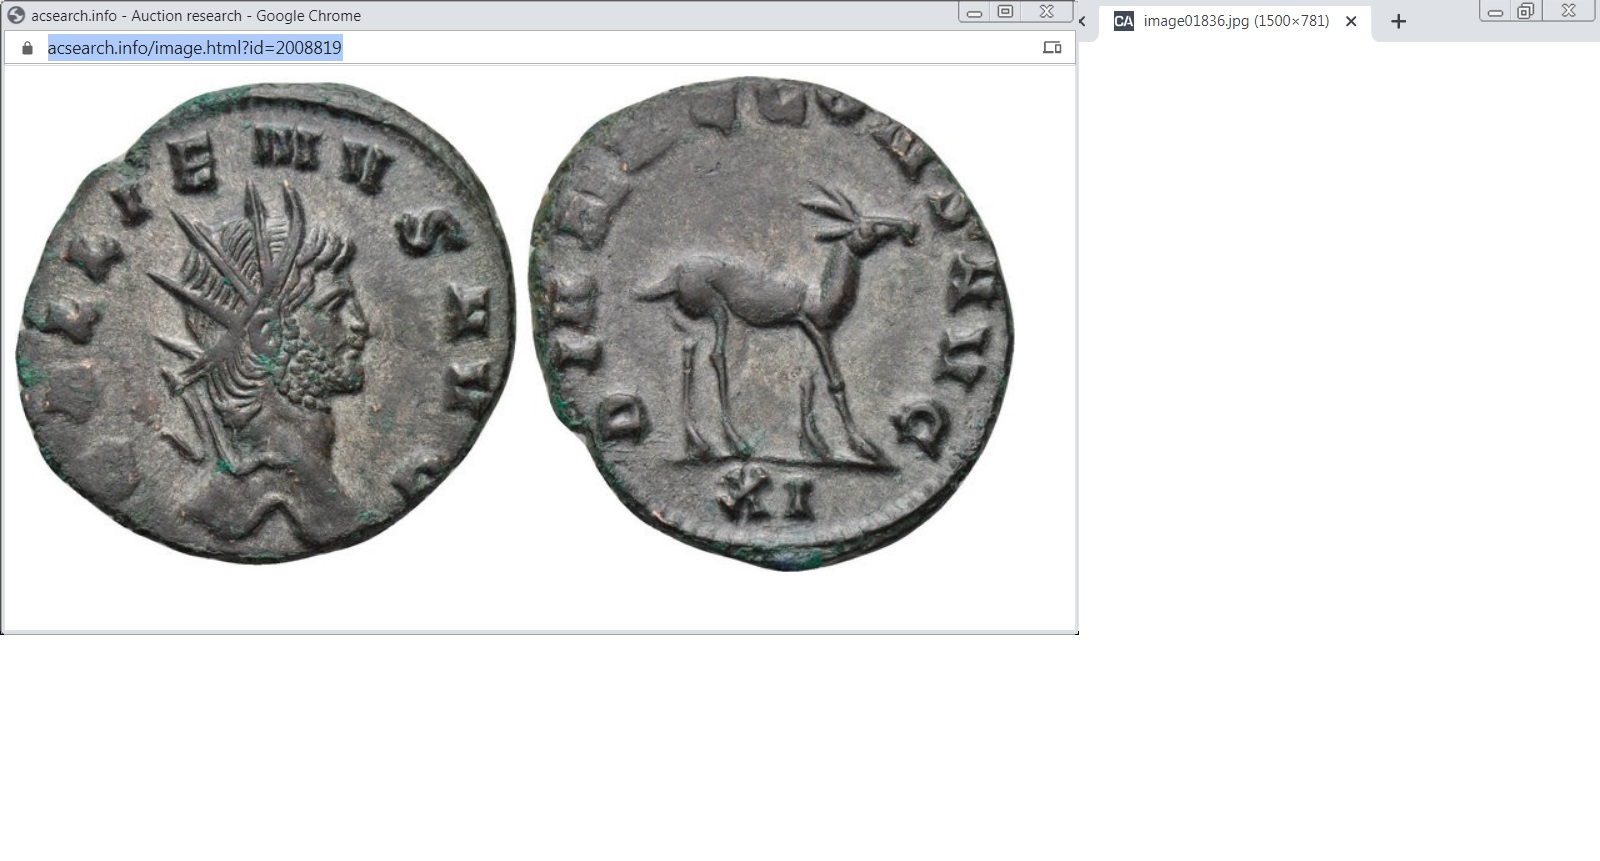 Gallienus - Gazelle - Officina XI -Numismatik Naumann 2014 - acsearch.info-image.html-id-2008819.jpg